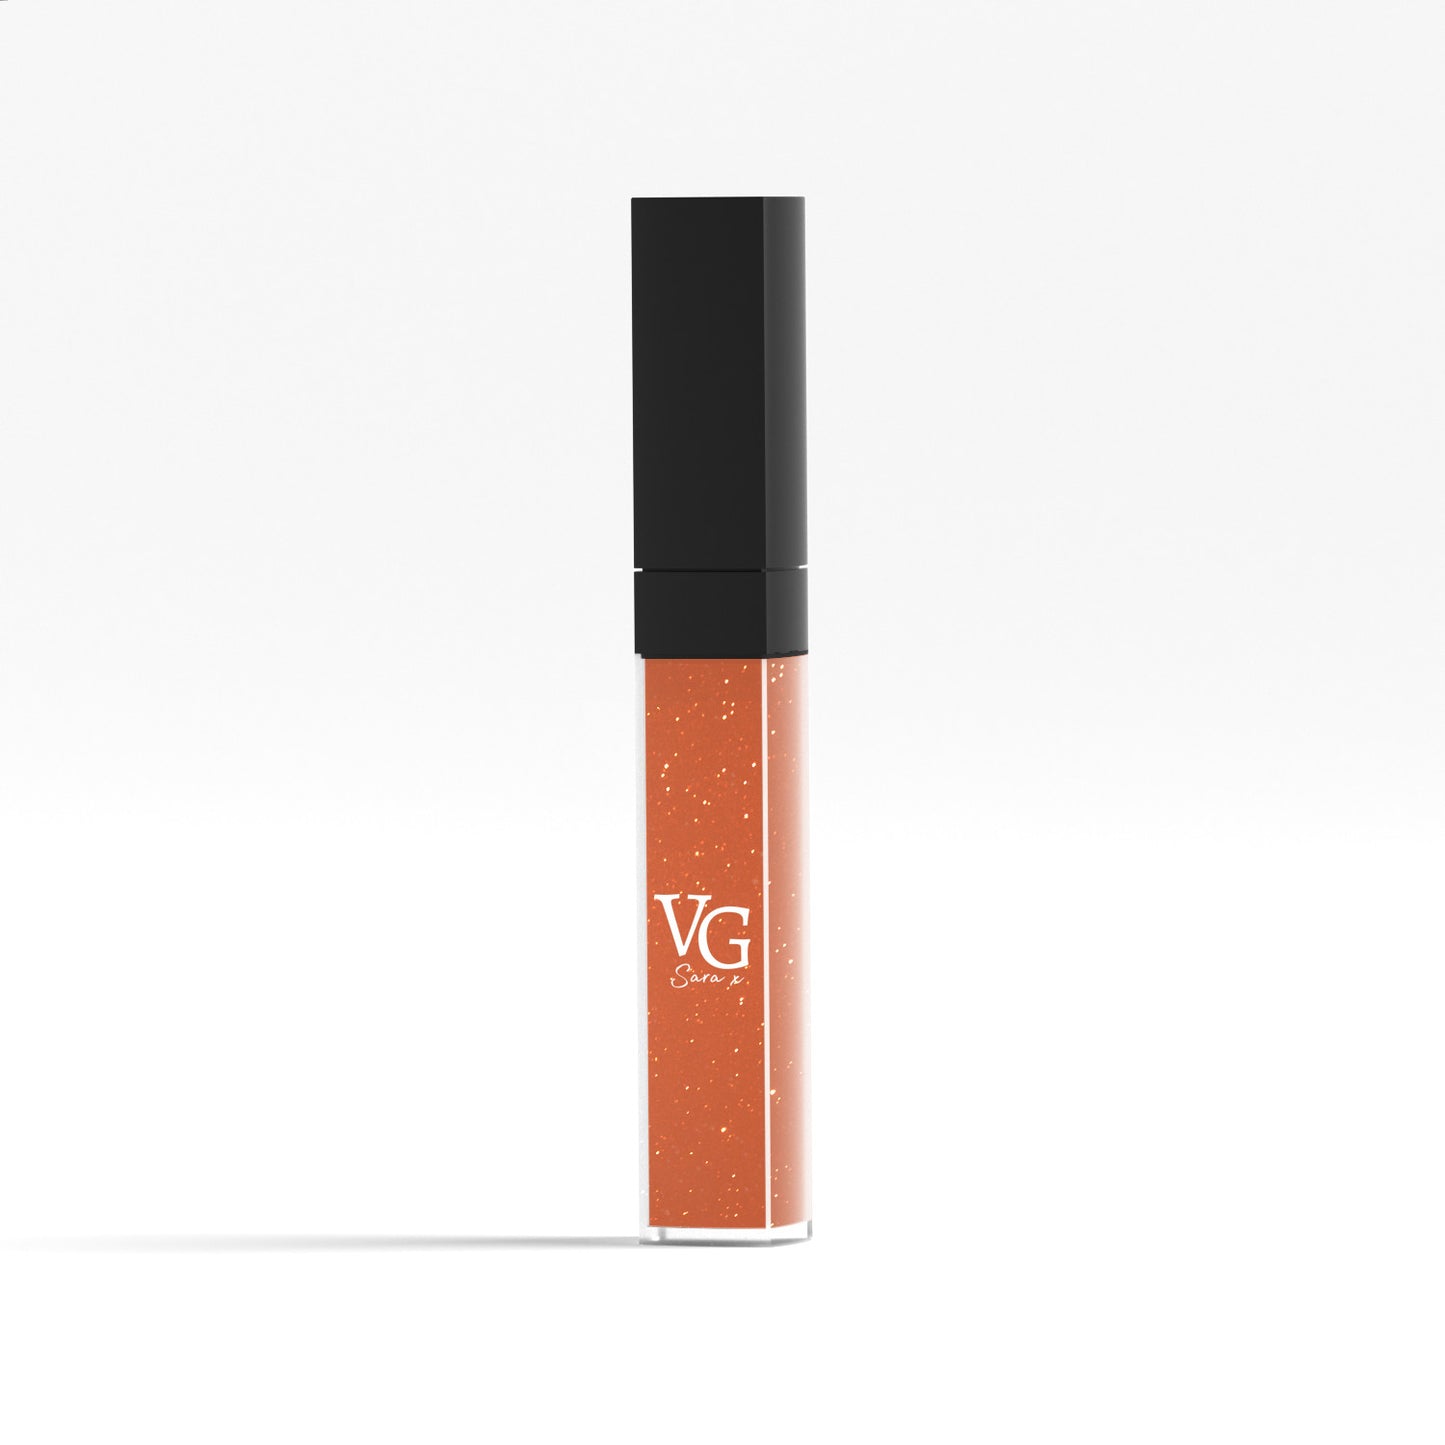 Vegan lipstick featuring the brand's signature VG mark